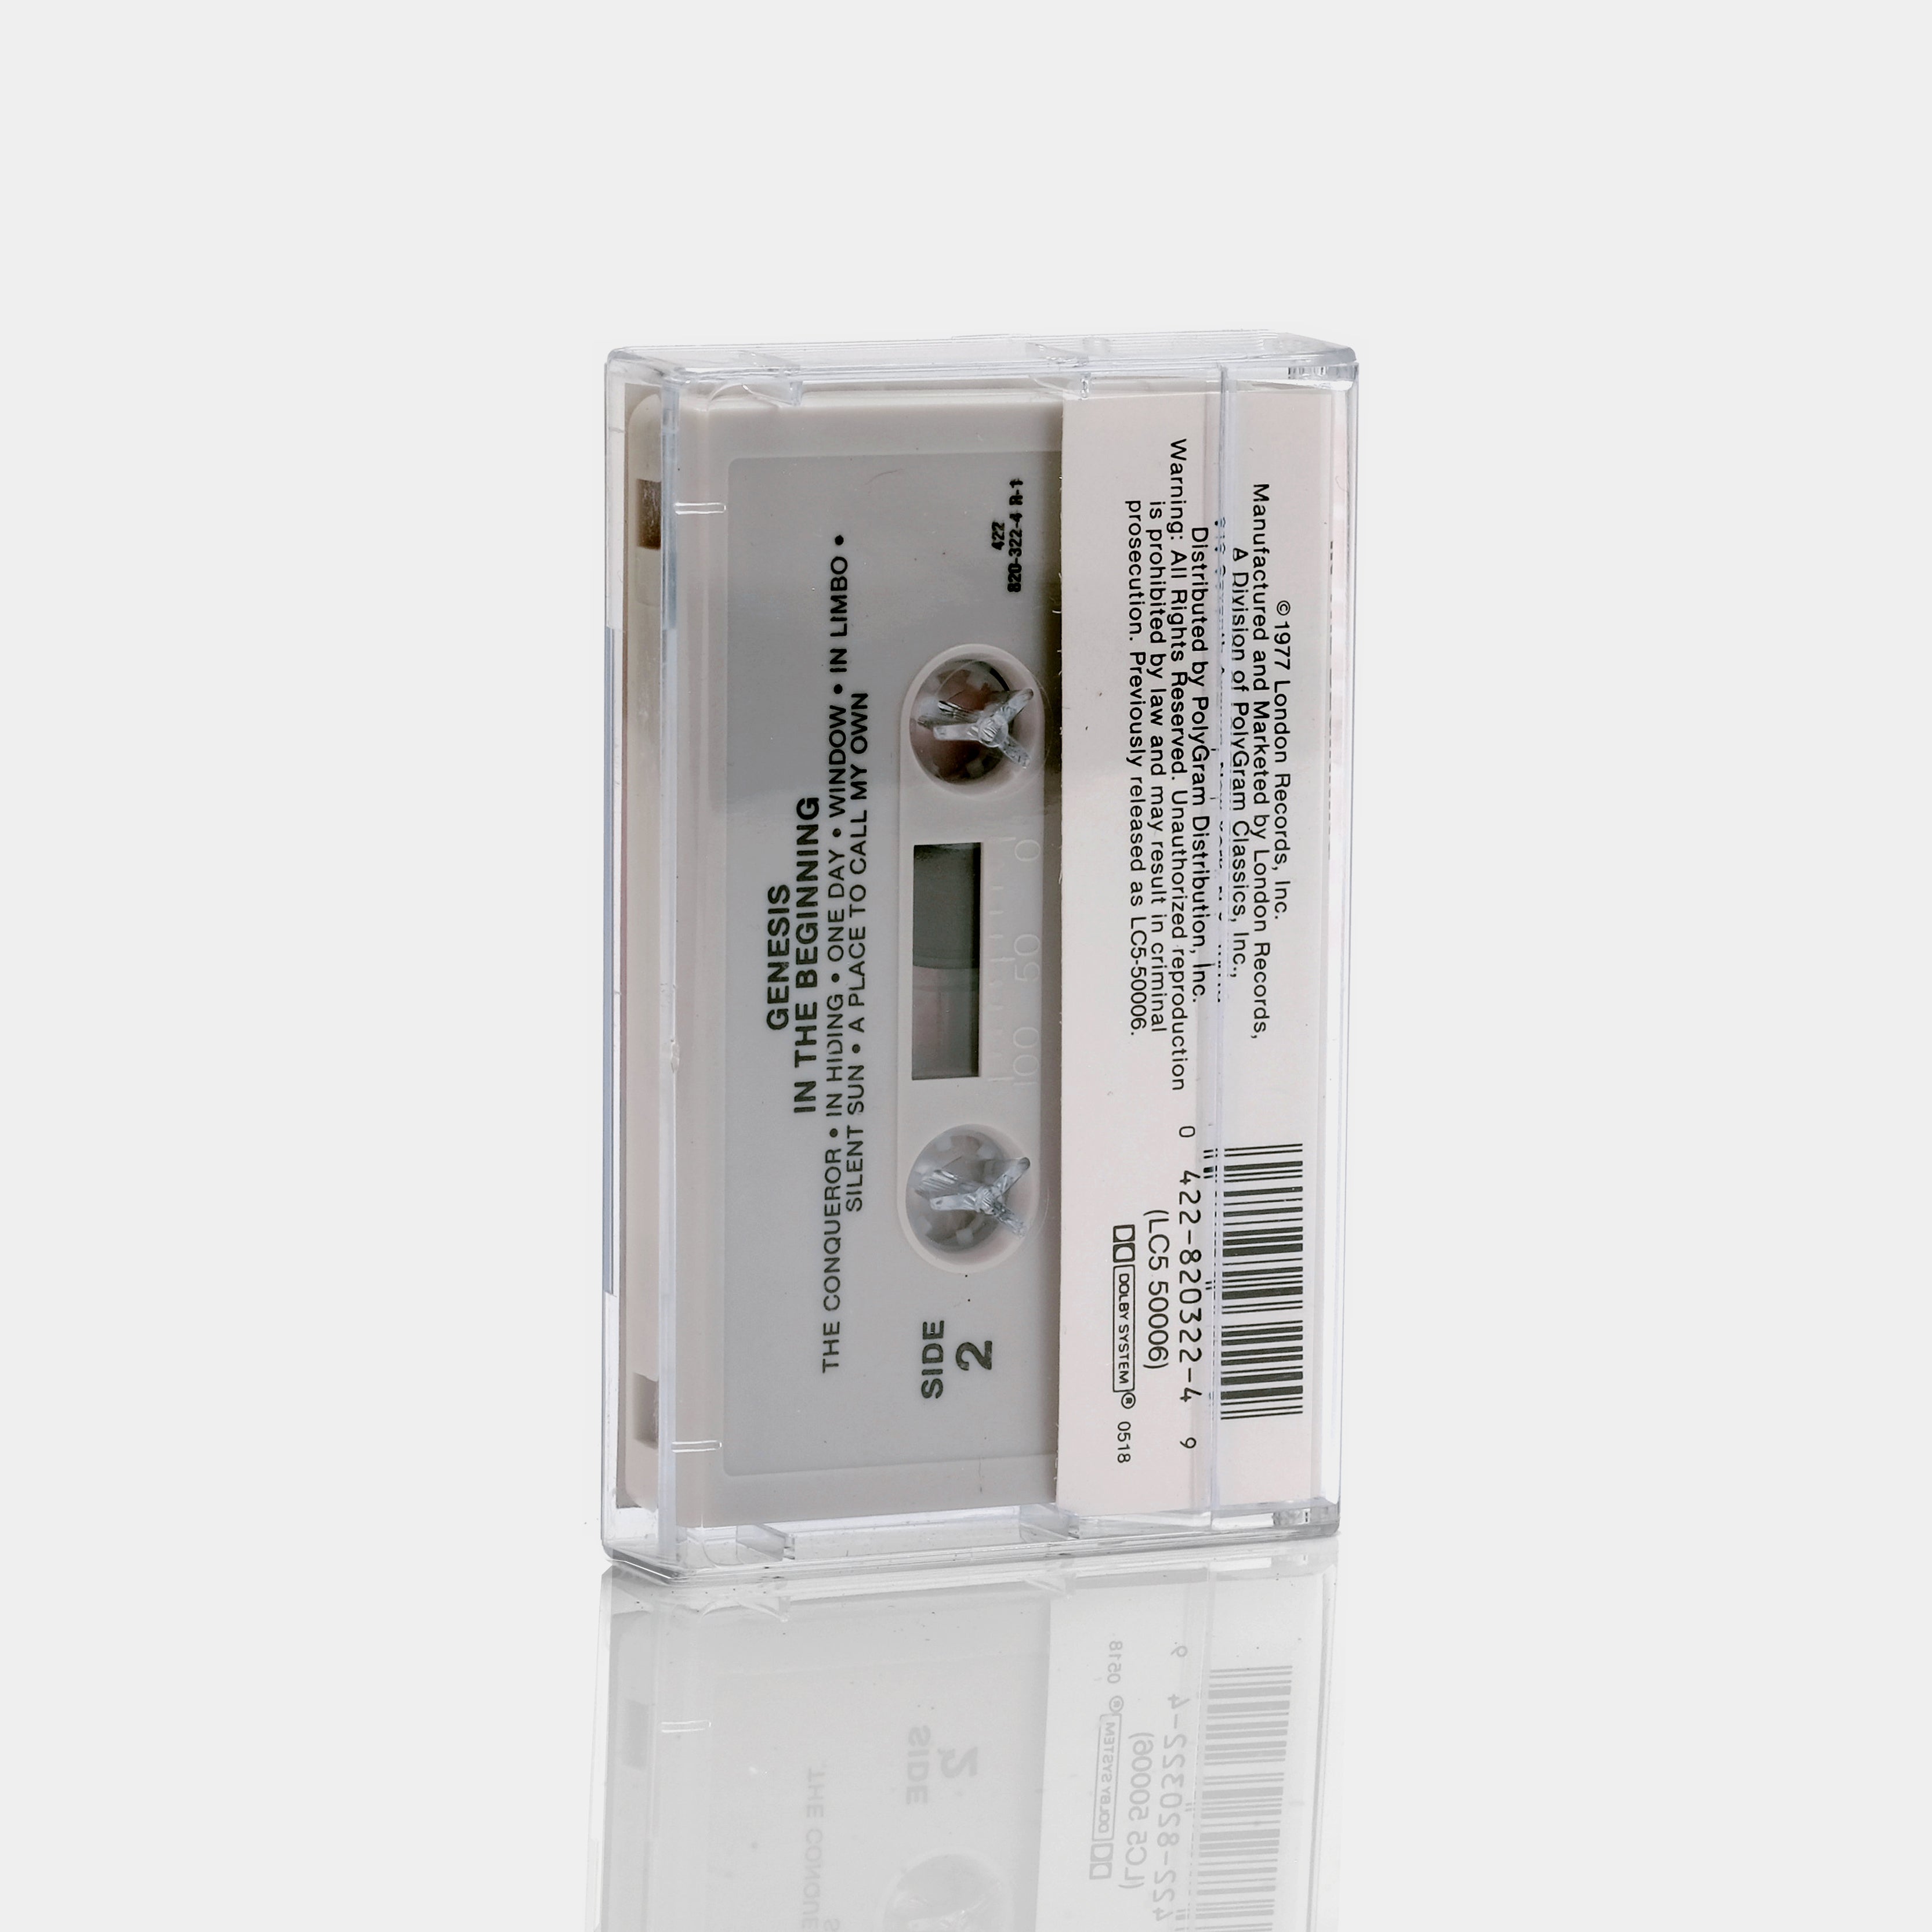 Genesis - In The Beginning Cassette Tape